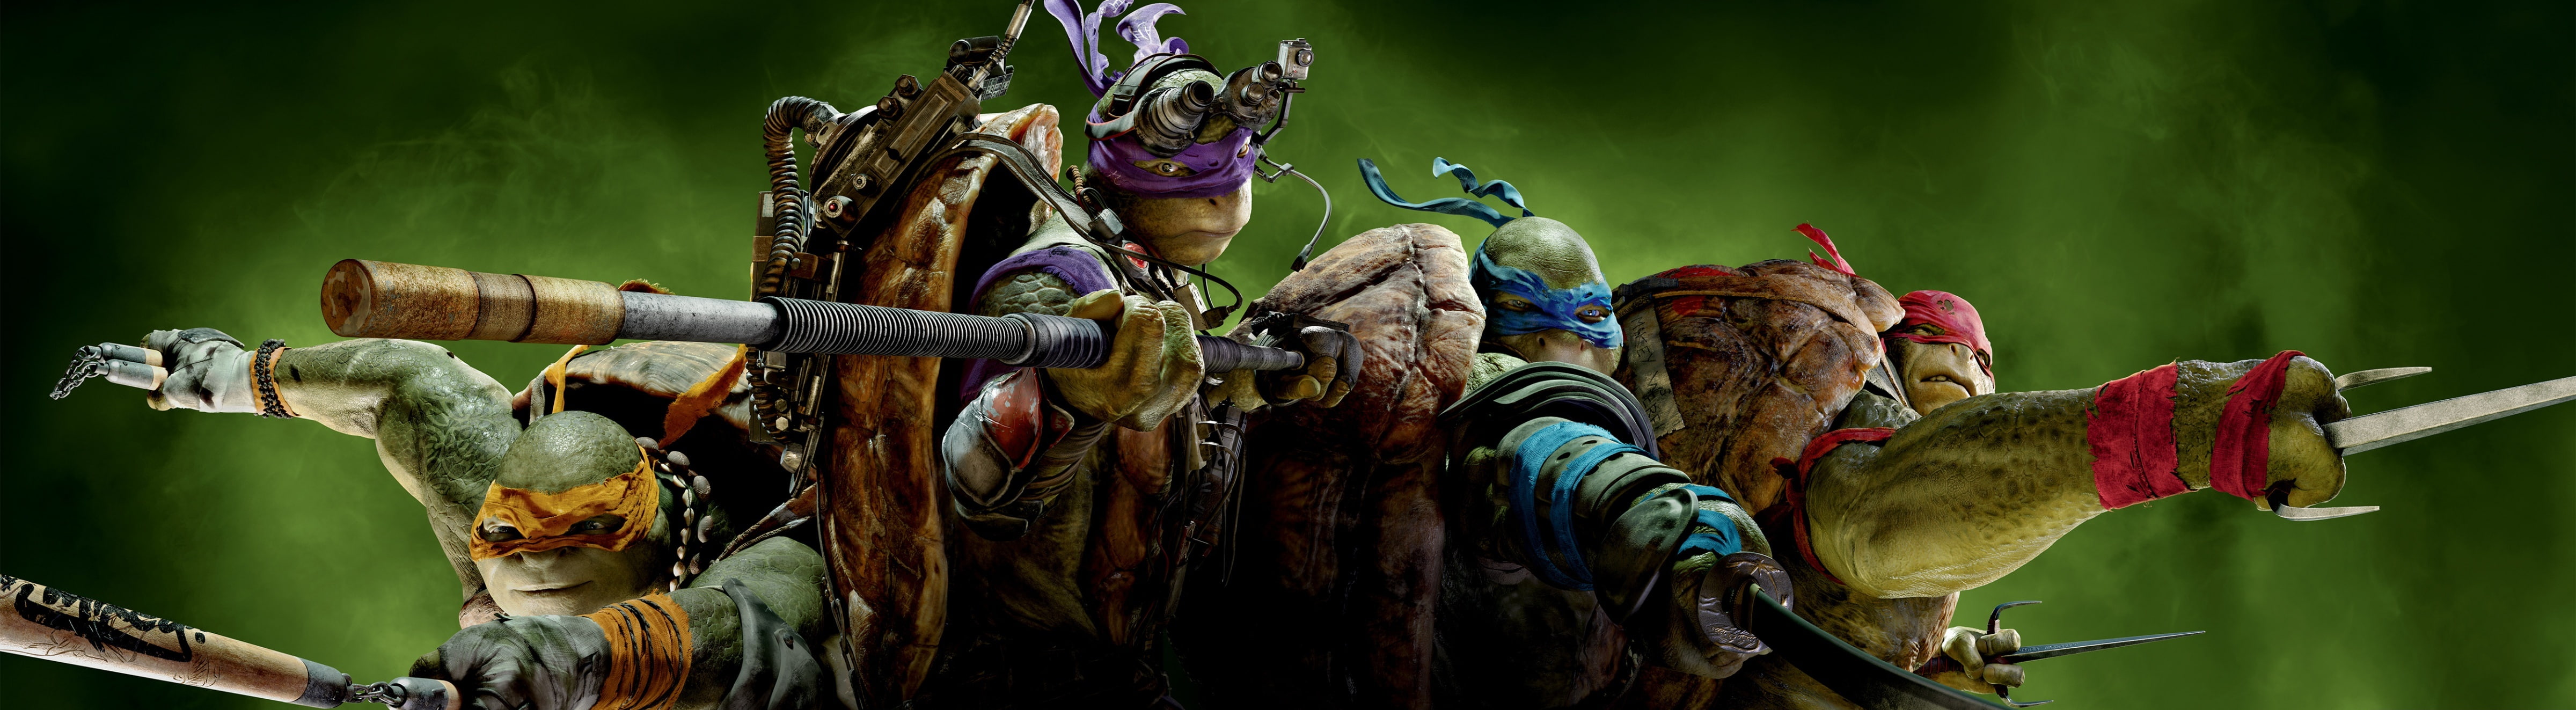 Ninja Turtles 2014, TMNT digital wallpaper, Cartoons, Michelangelo